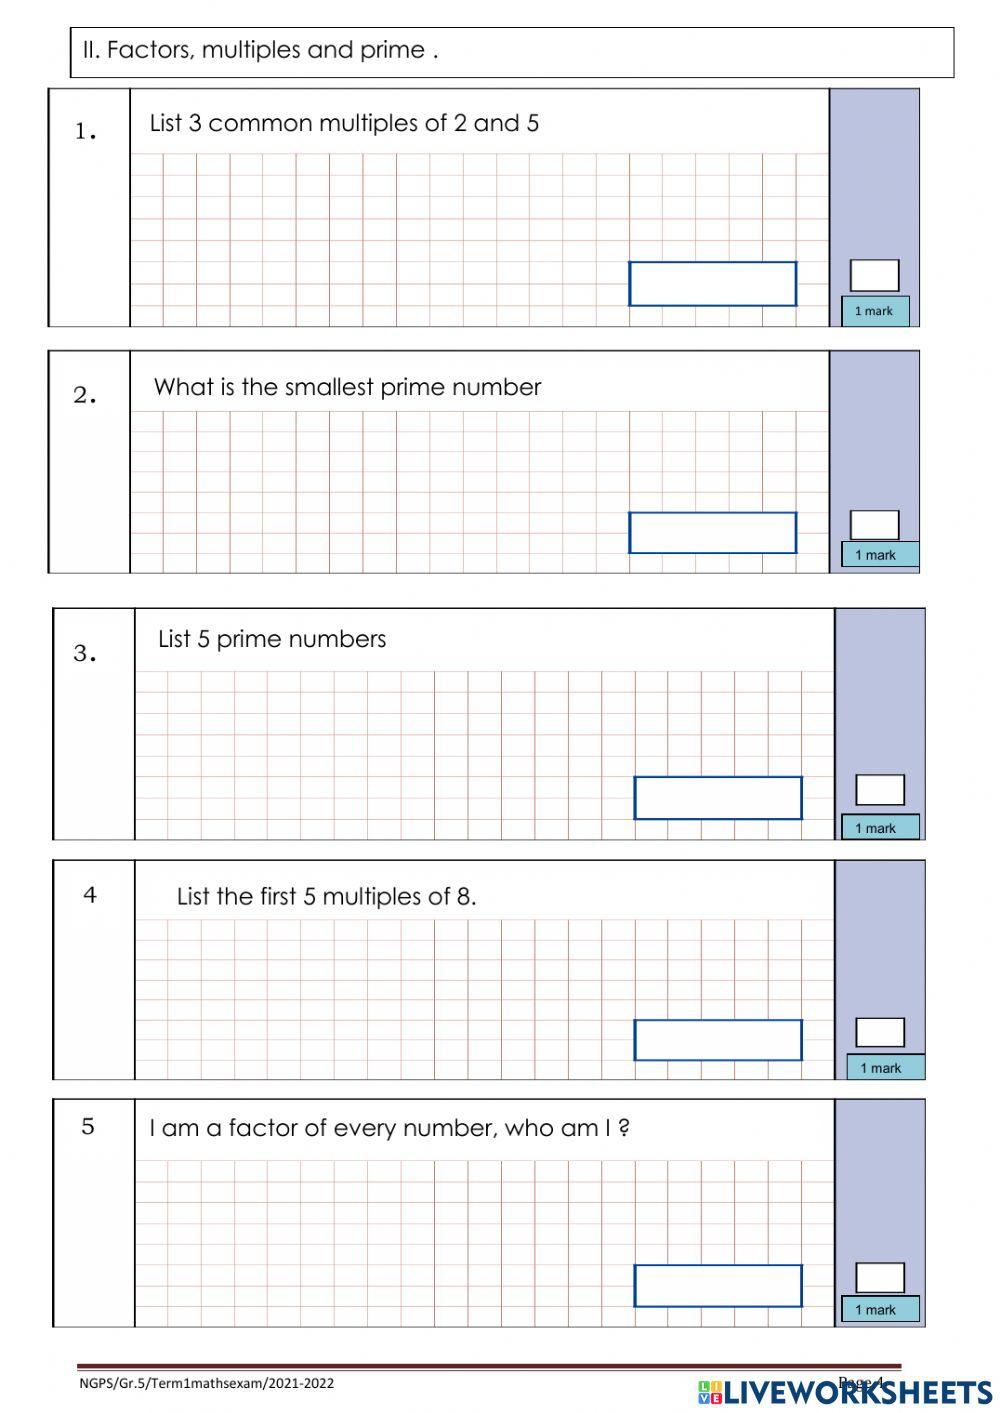 Mathematics Exam Paper 1 - Grade 5